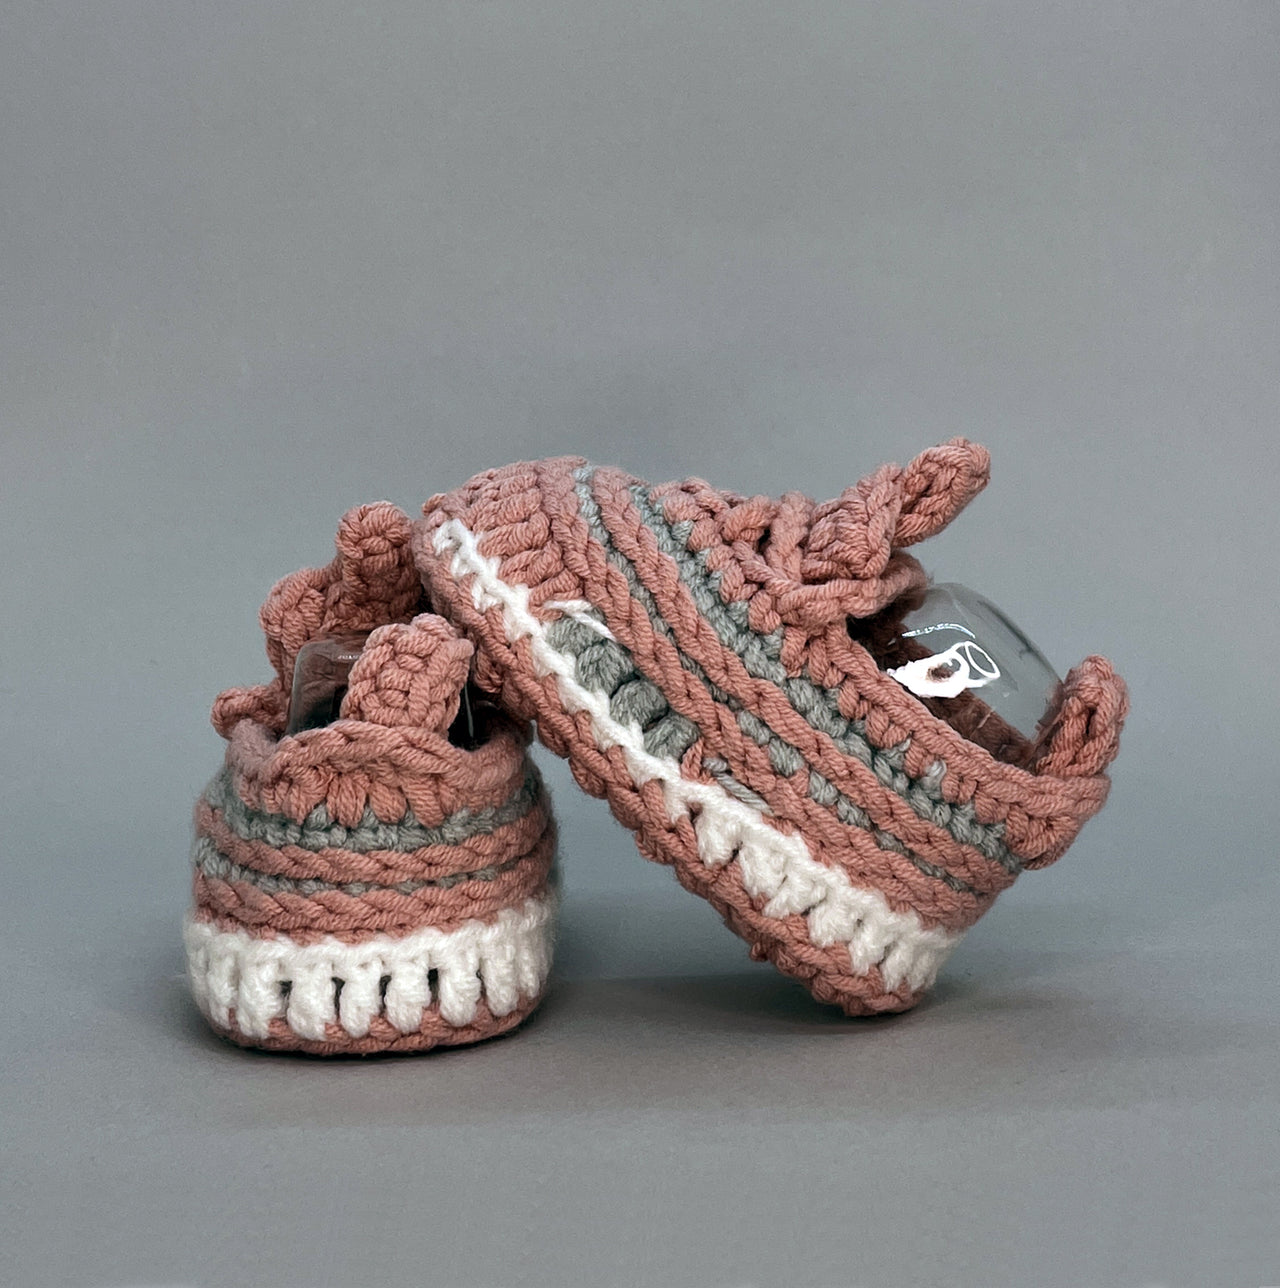 Baby Crochet Sneakers - Air Max Pink